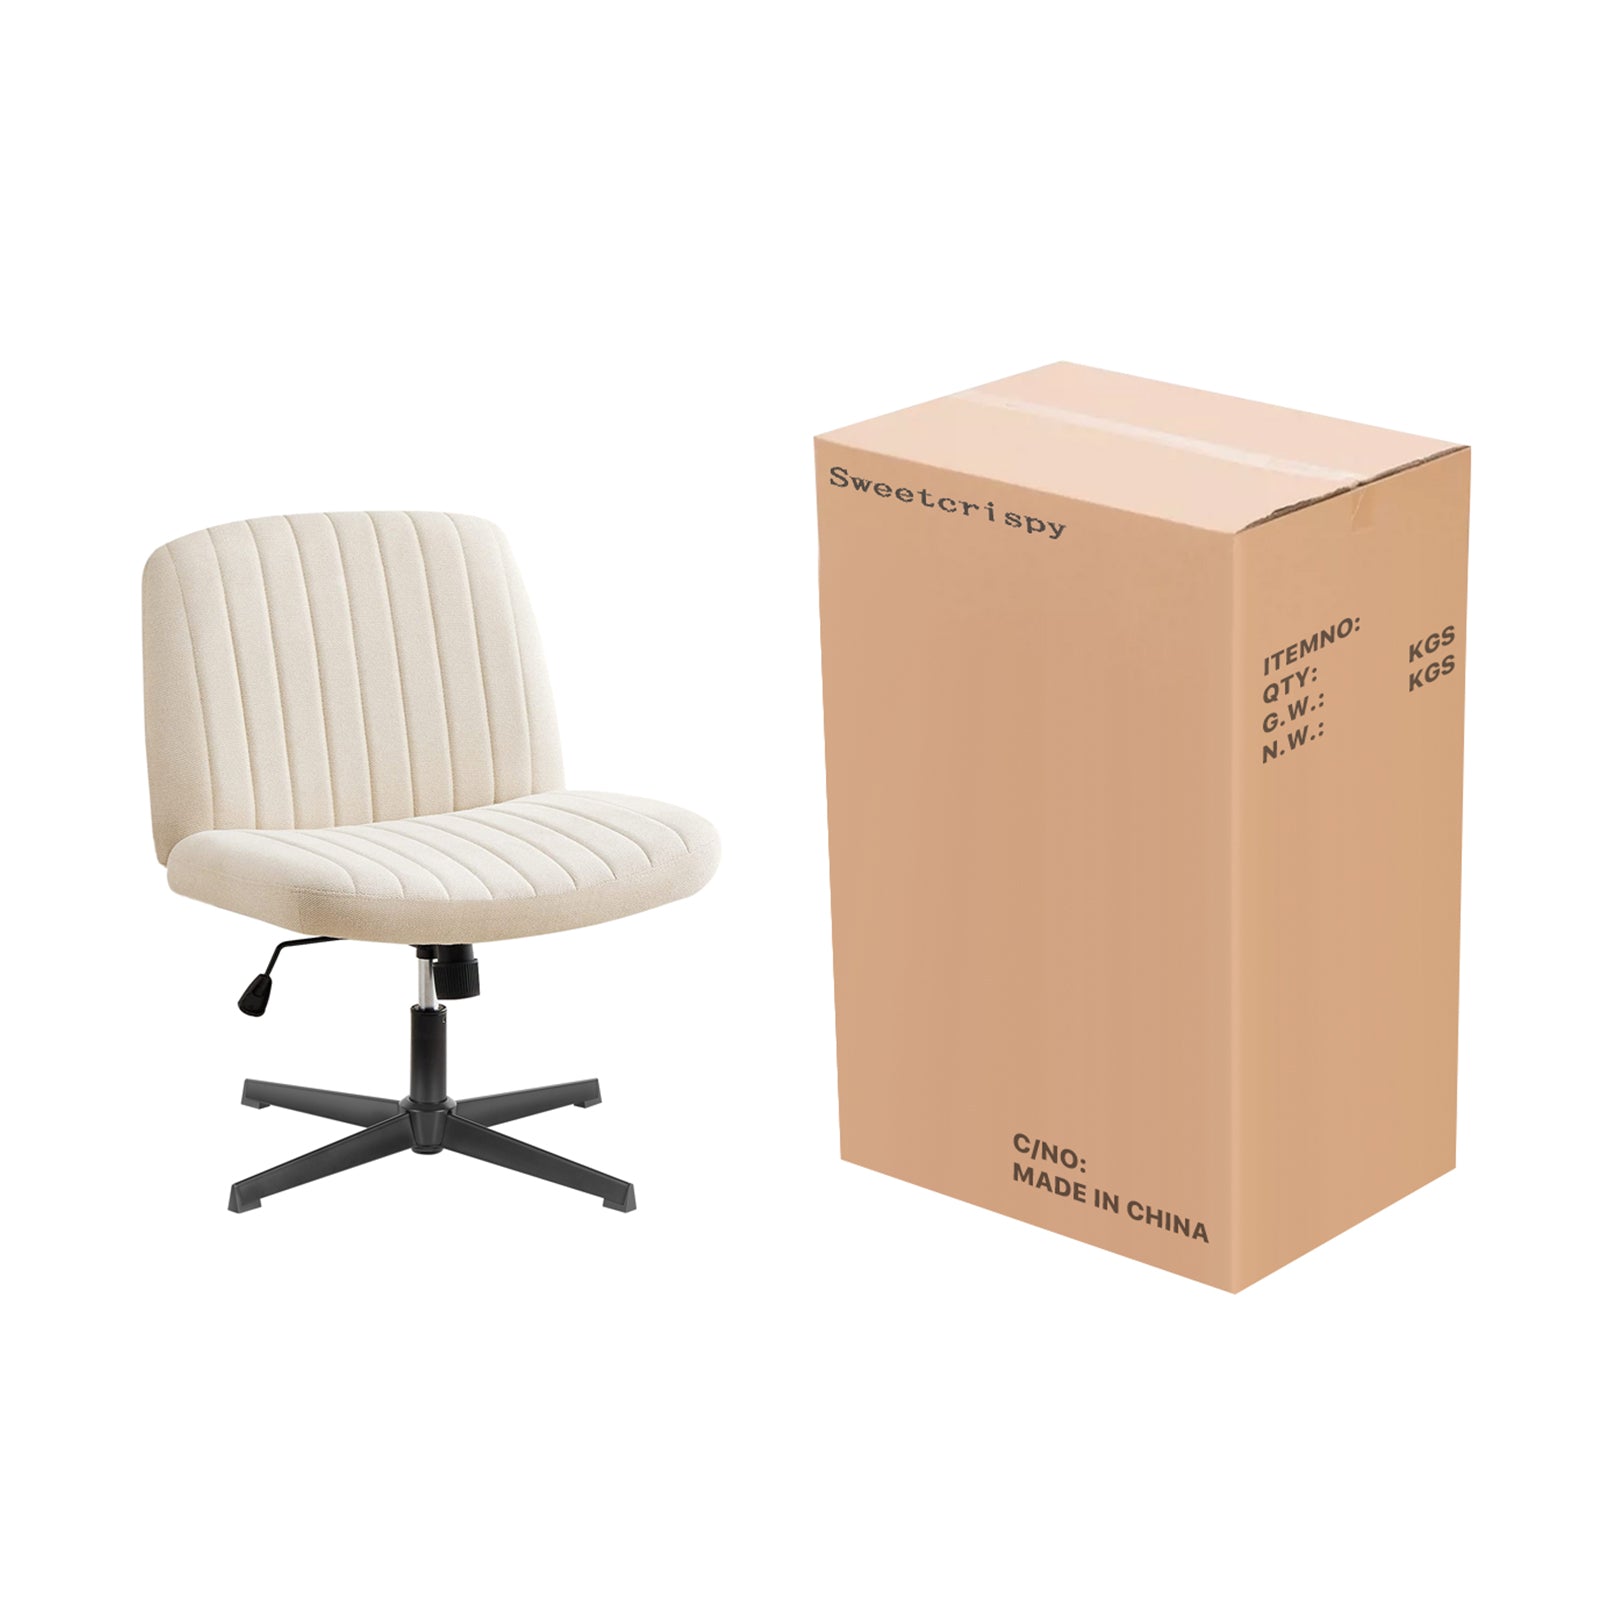 SWEETCRISPY Cross-Legged Chair,No Wheels Armless Swivel Home Office Chair，300 hundred stockpile purchases